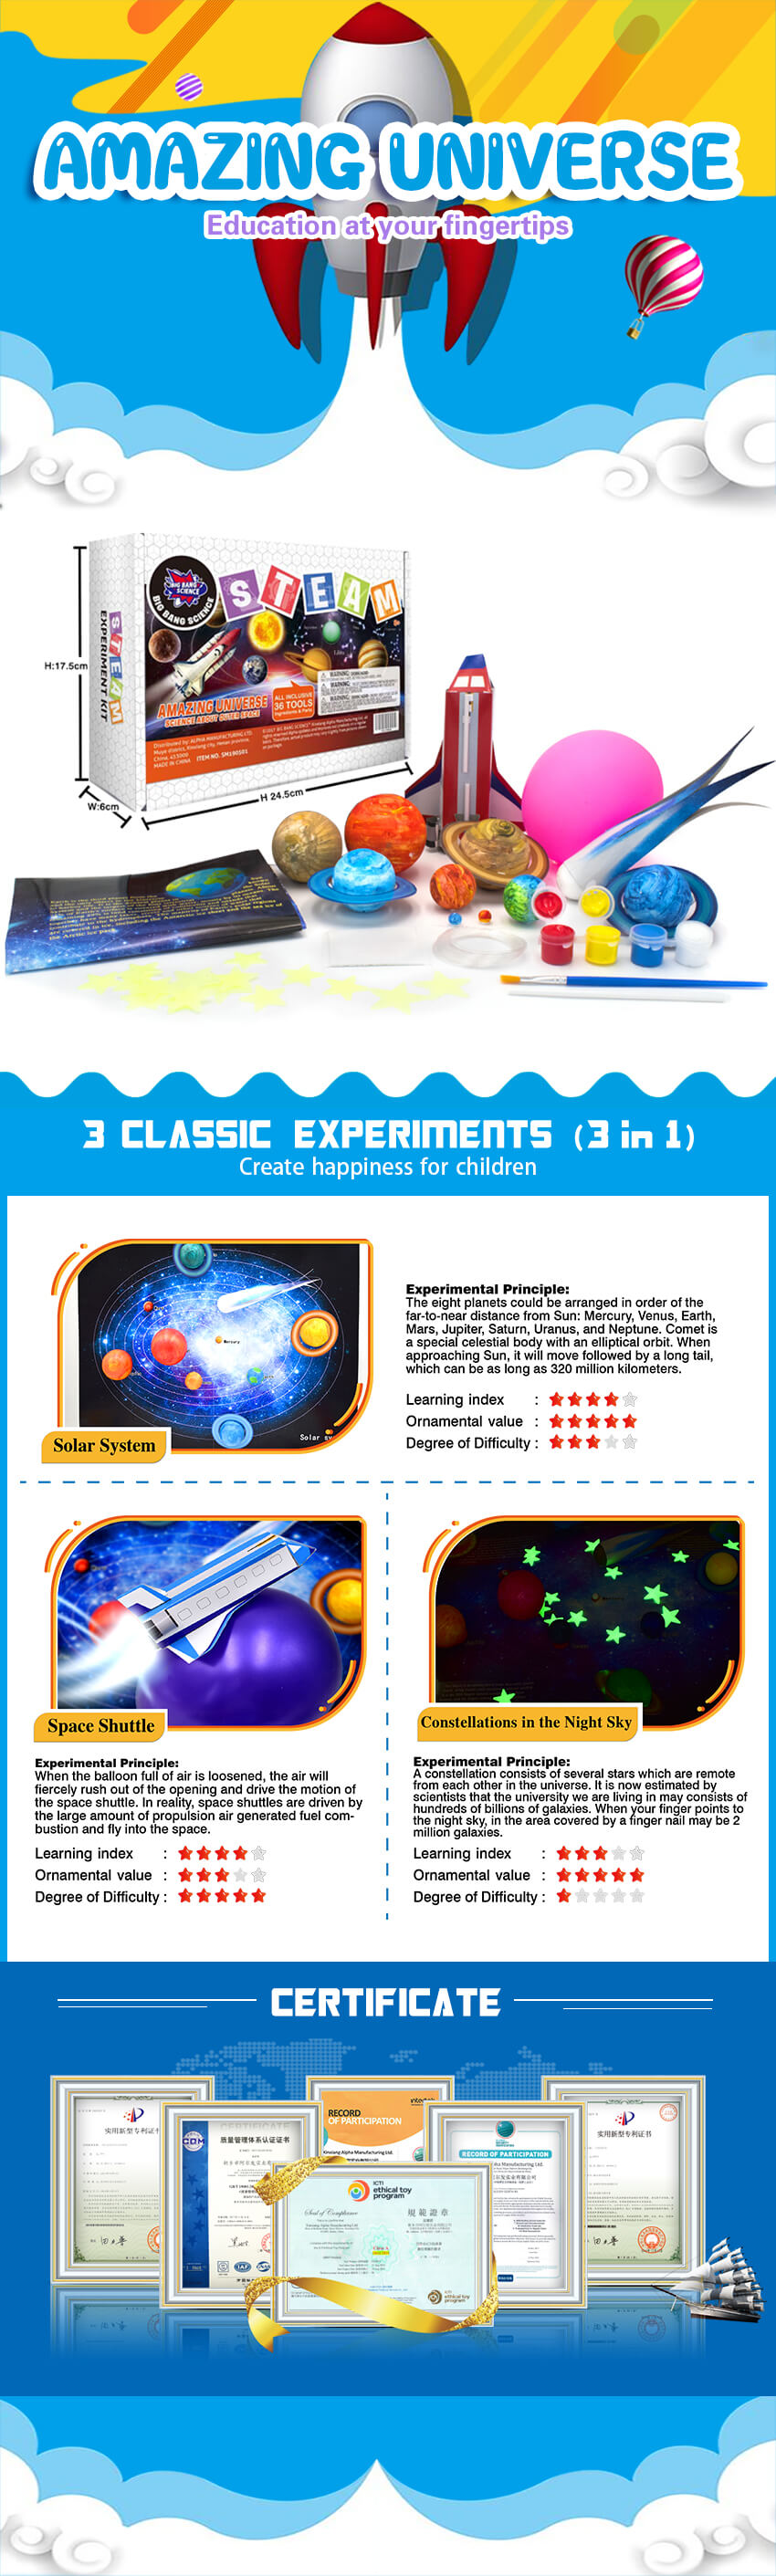 Amazing Universe medium-kit-space toys for kids